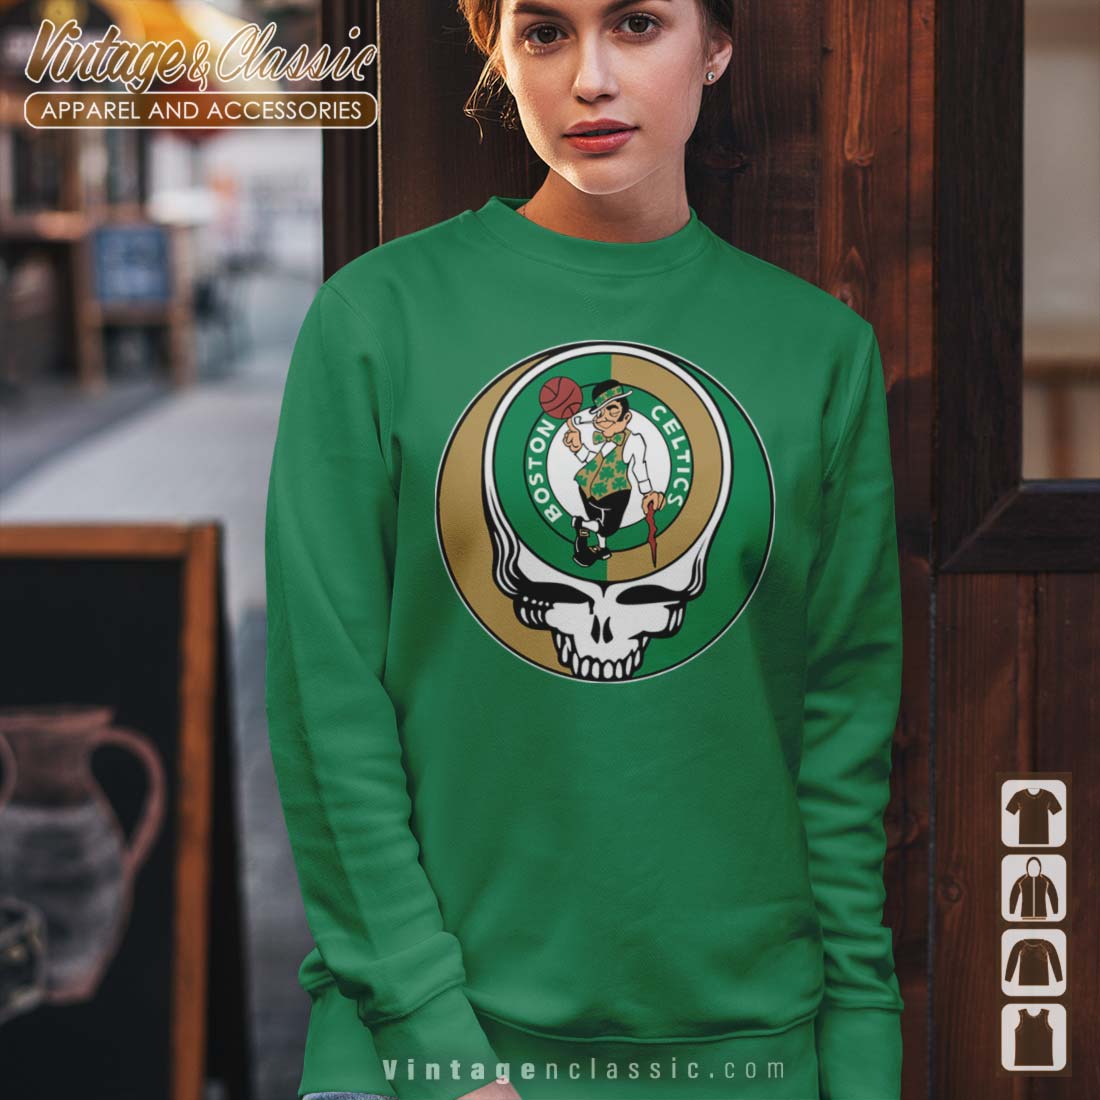 Boston Garden Sweatshirt Boston Celtics Shirt 90s Boston 